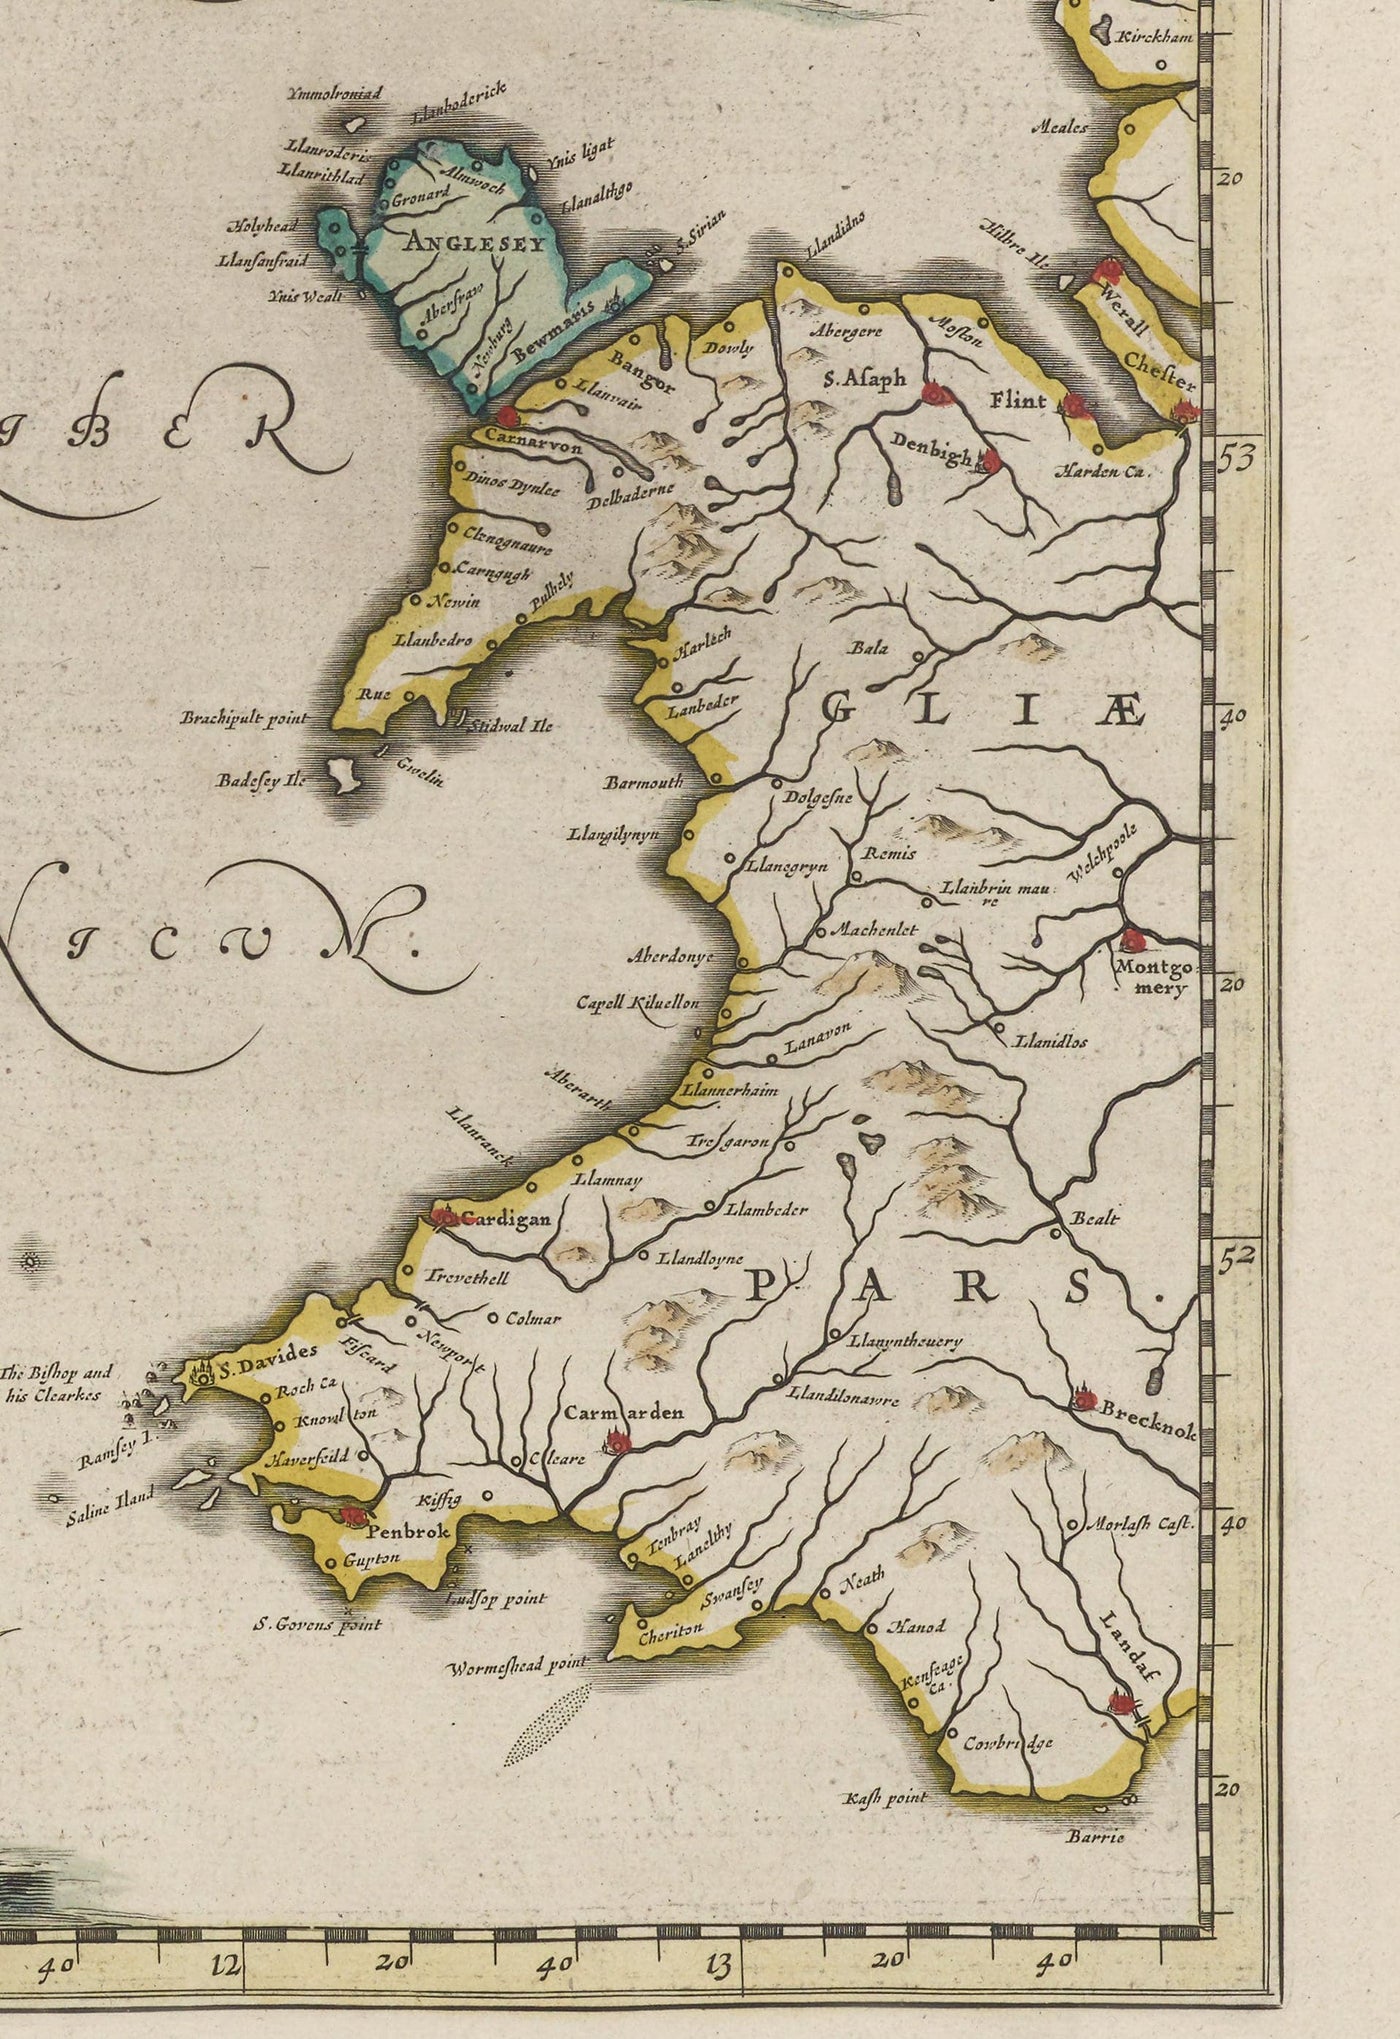 Old Map of Ireland, Hibernia in 1654 by Joan Blaeu from the Theatrum Orbis Terrarum Sive Atlas Novus - British Isles